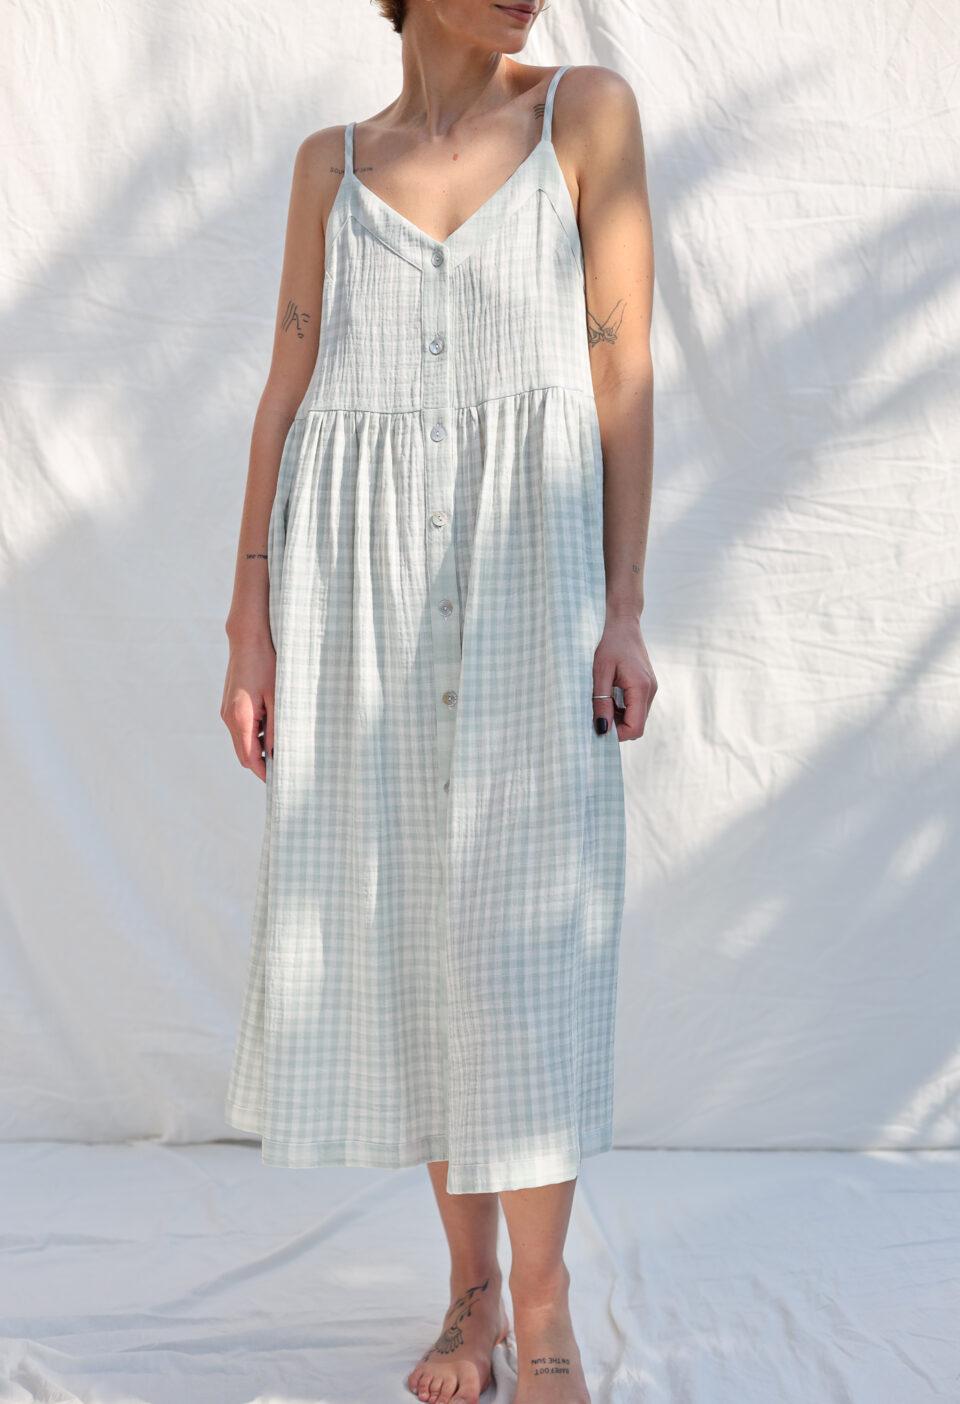 Sleeveless summer dress ELOISE in double gauze mint checks cotton | Dress | Sustainable clothing | OffOn clothing